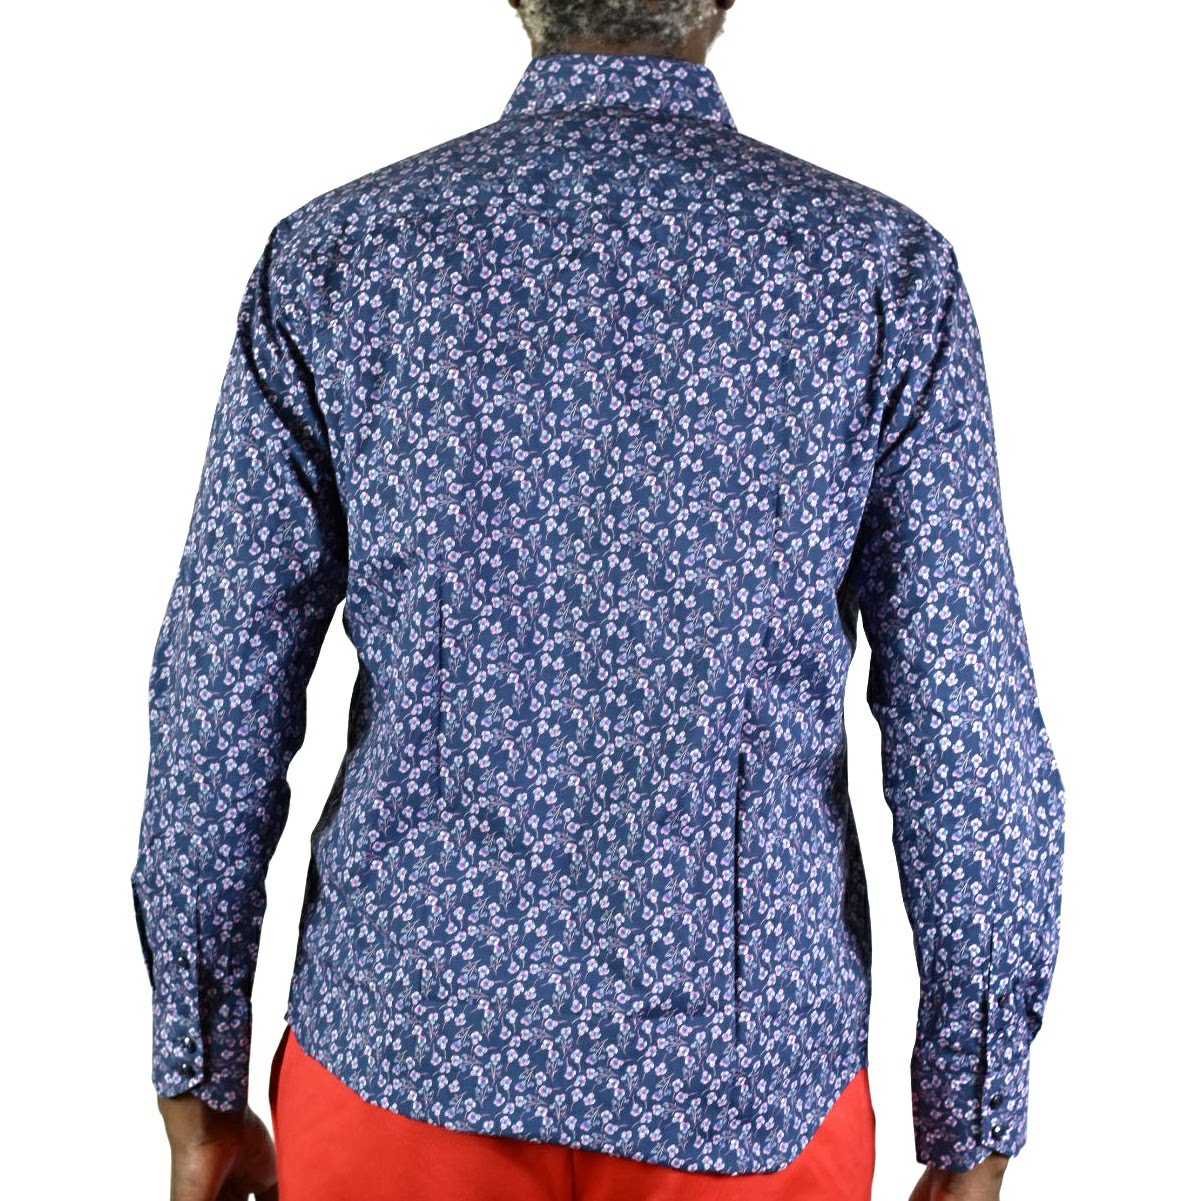 Quieti Floral Woven Shirt Size Medium Mens